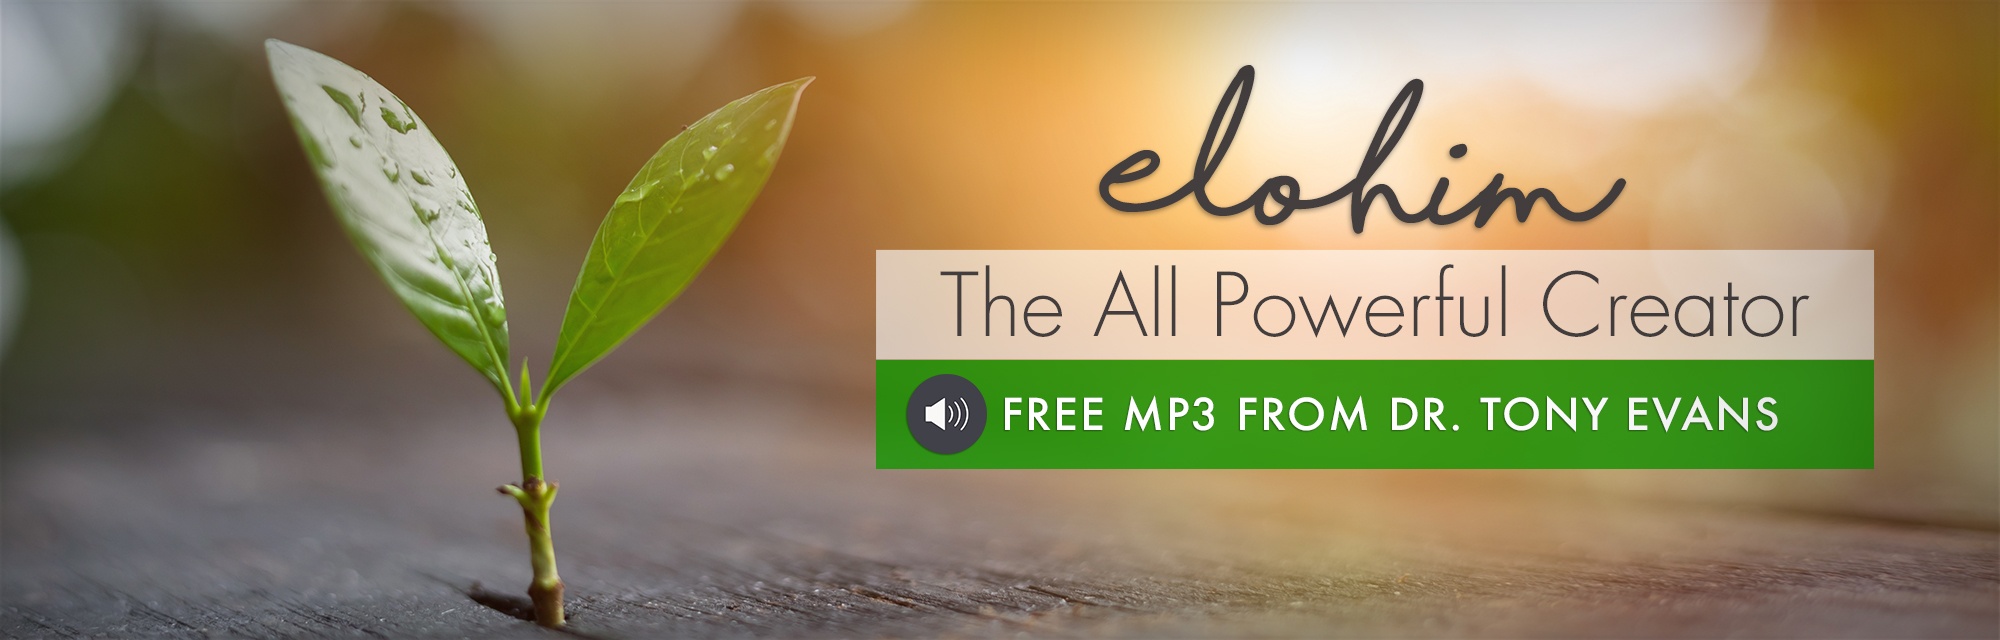 Elohim: The All Powerful Creator